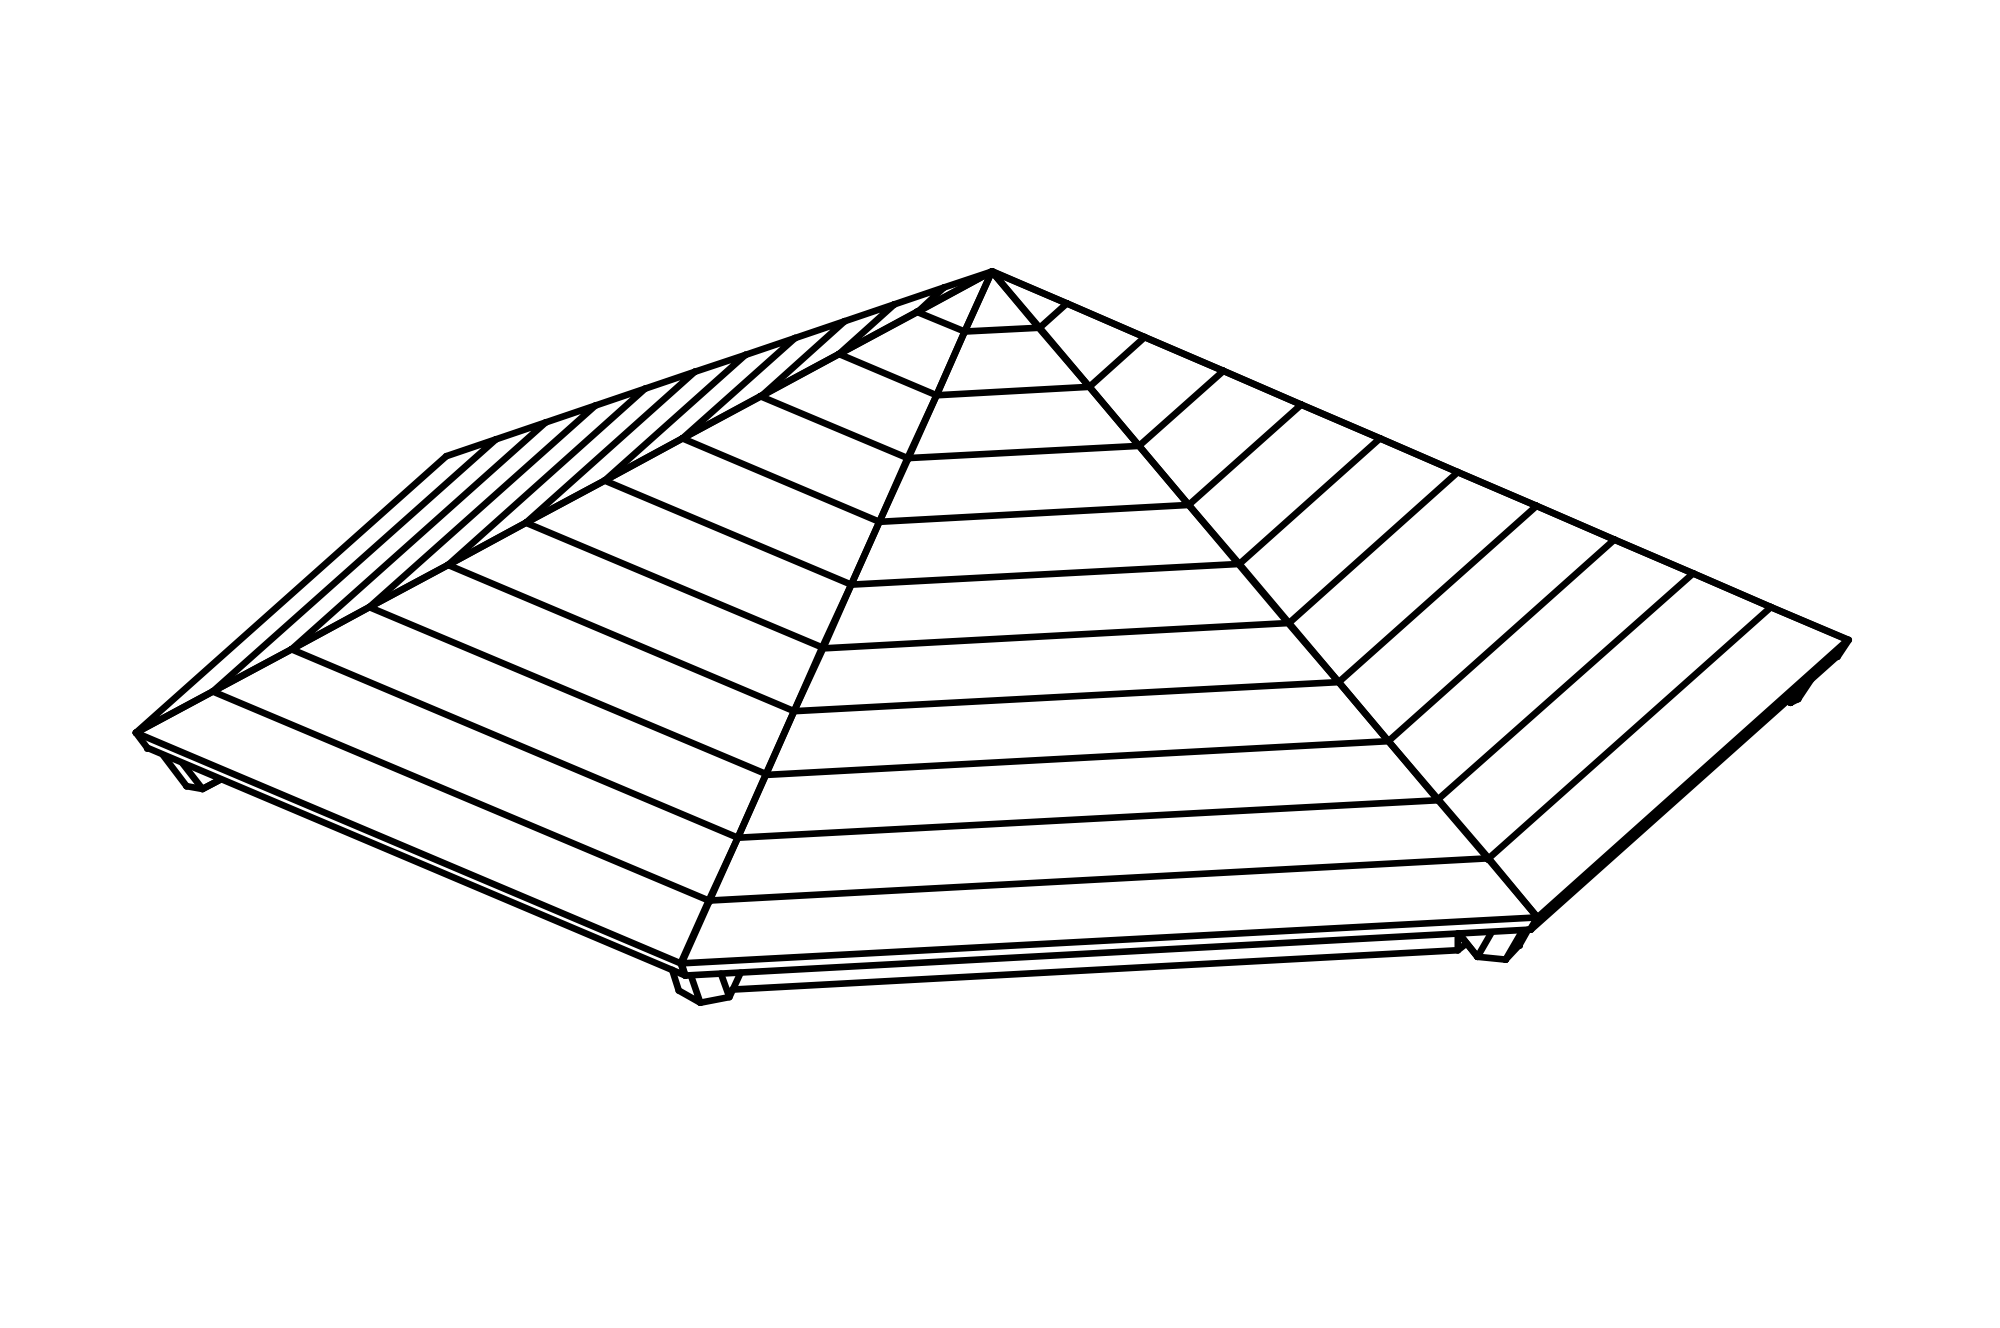 Roof for Hexagonal Platforms